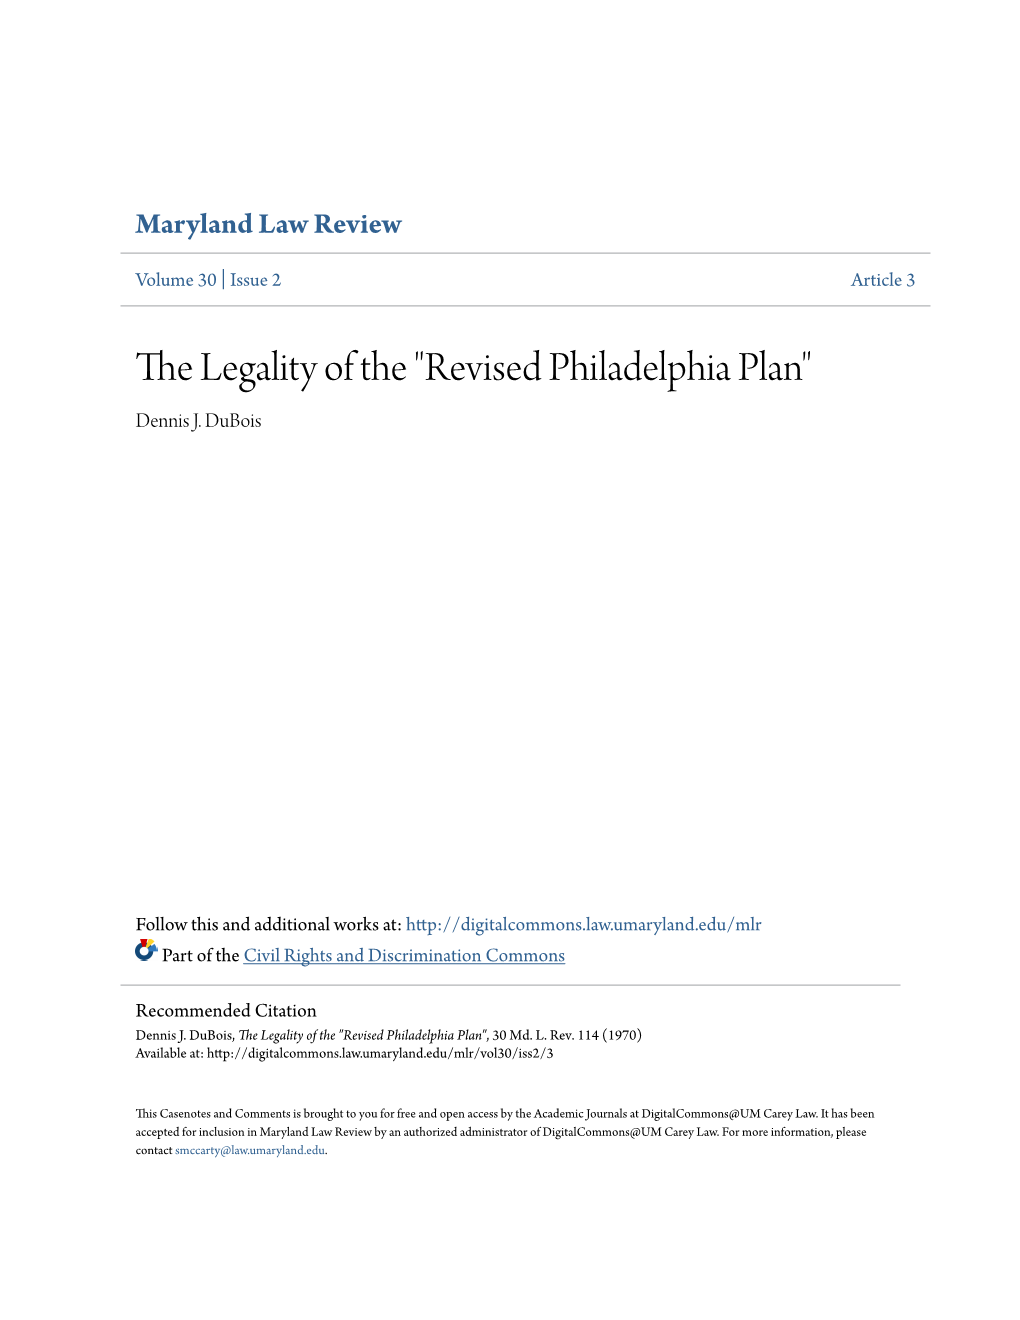 The Legality of the "Revised Philadelphia Plan" Dennis J